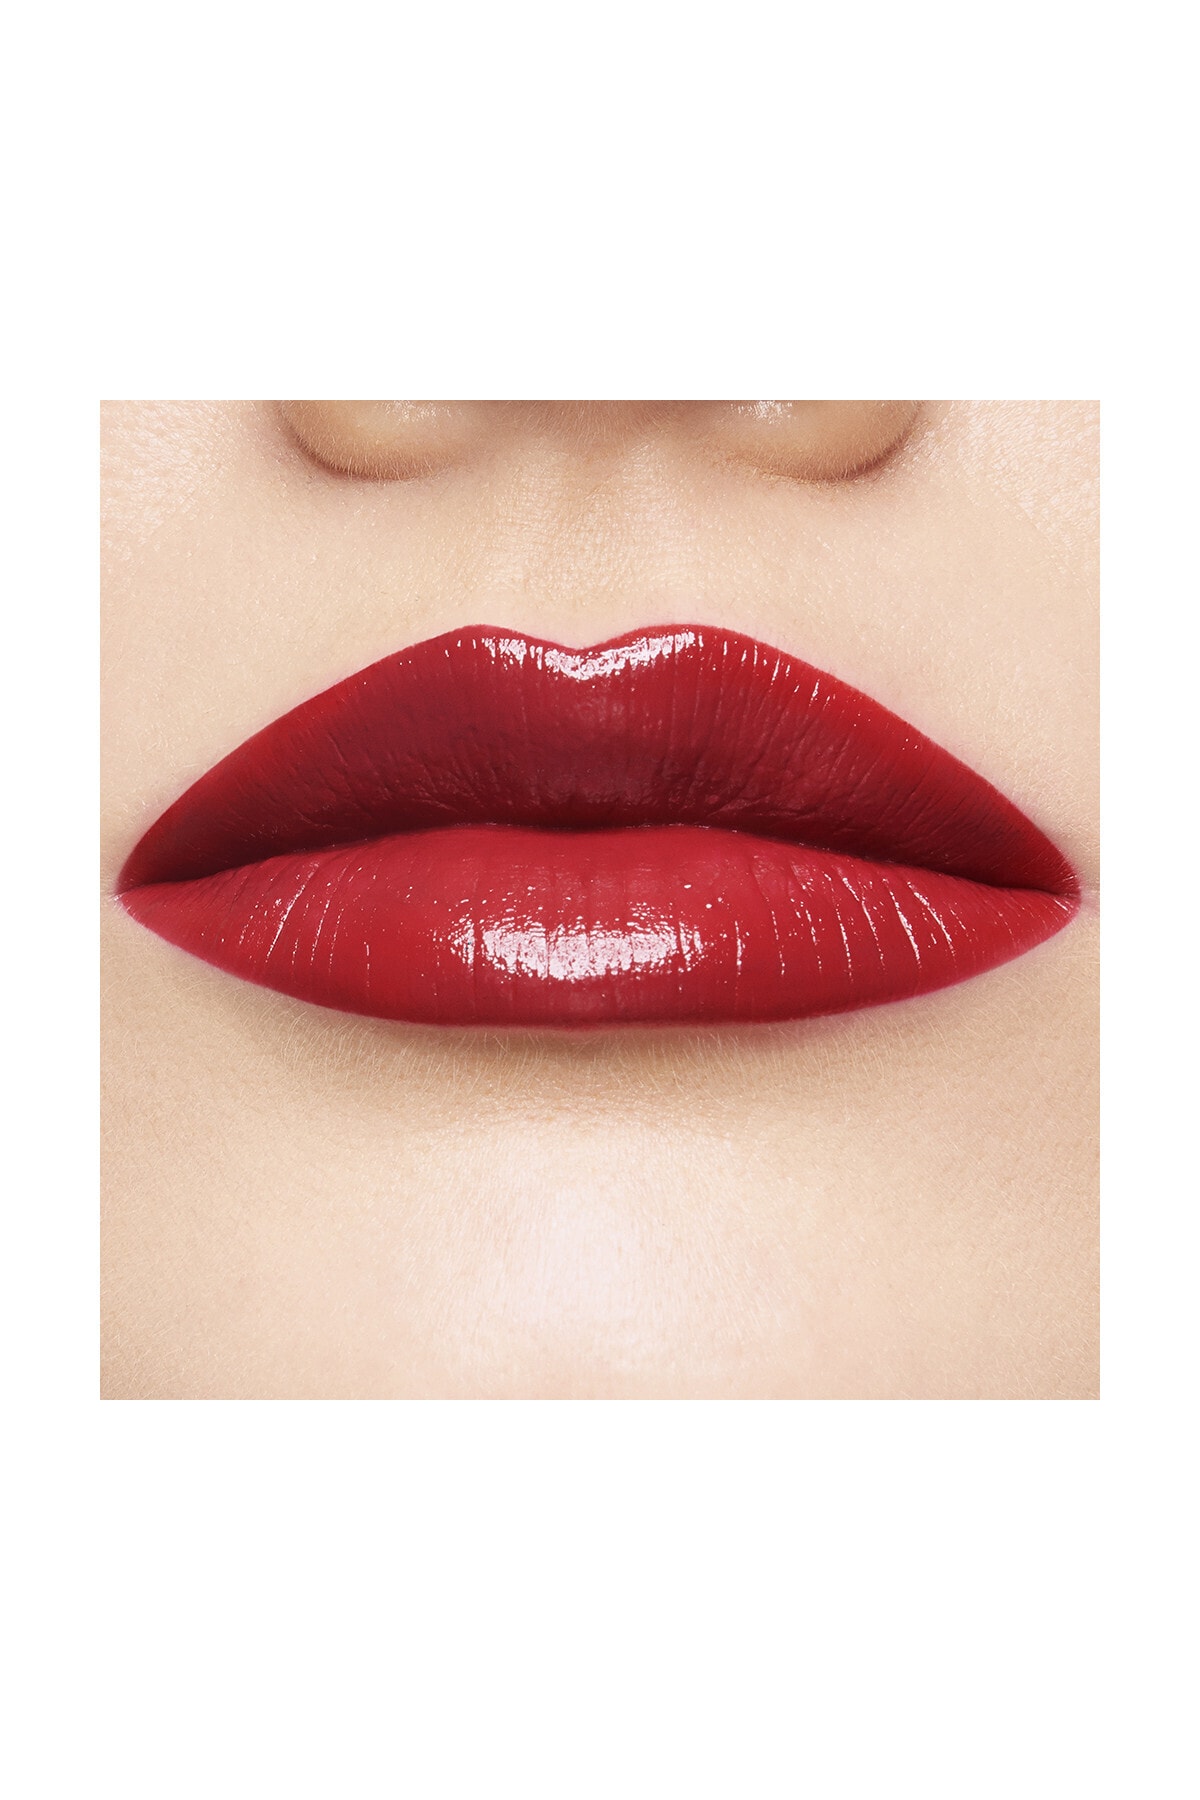 رژ لب - رنگ Sensational Made For All Lipstick 385 Ruby For Me میبلین Maybelline